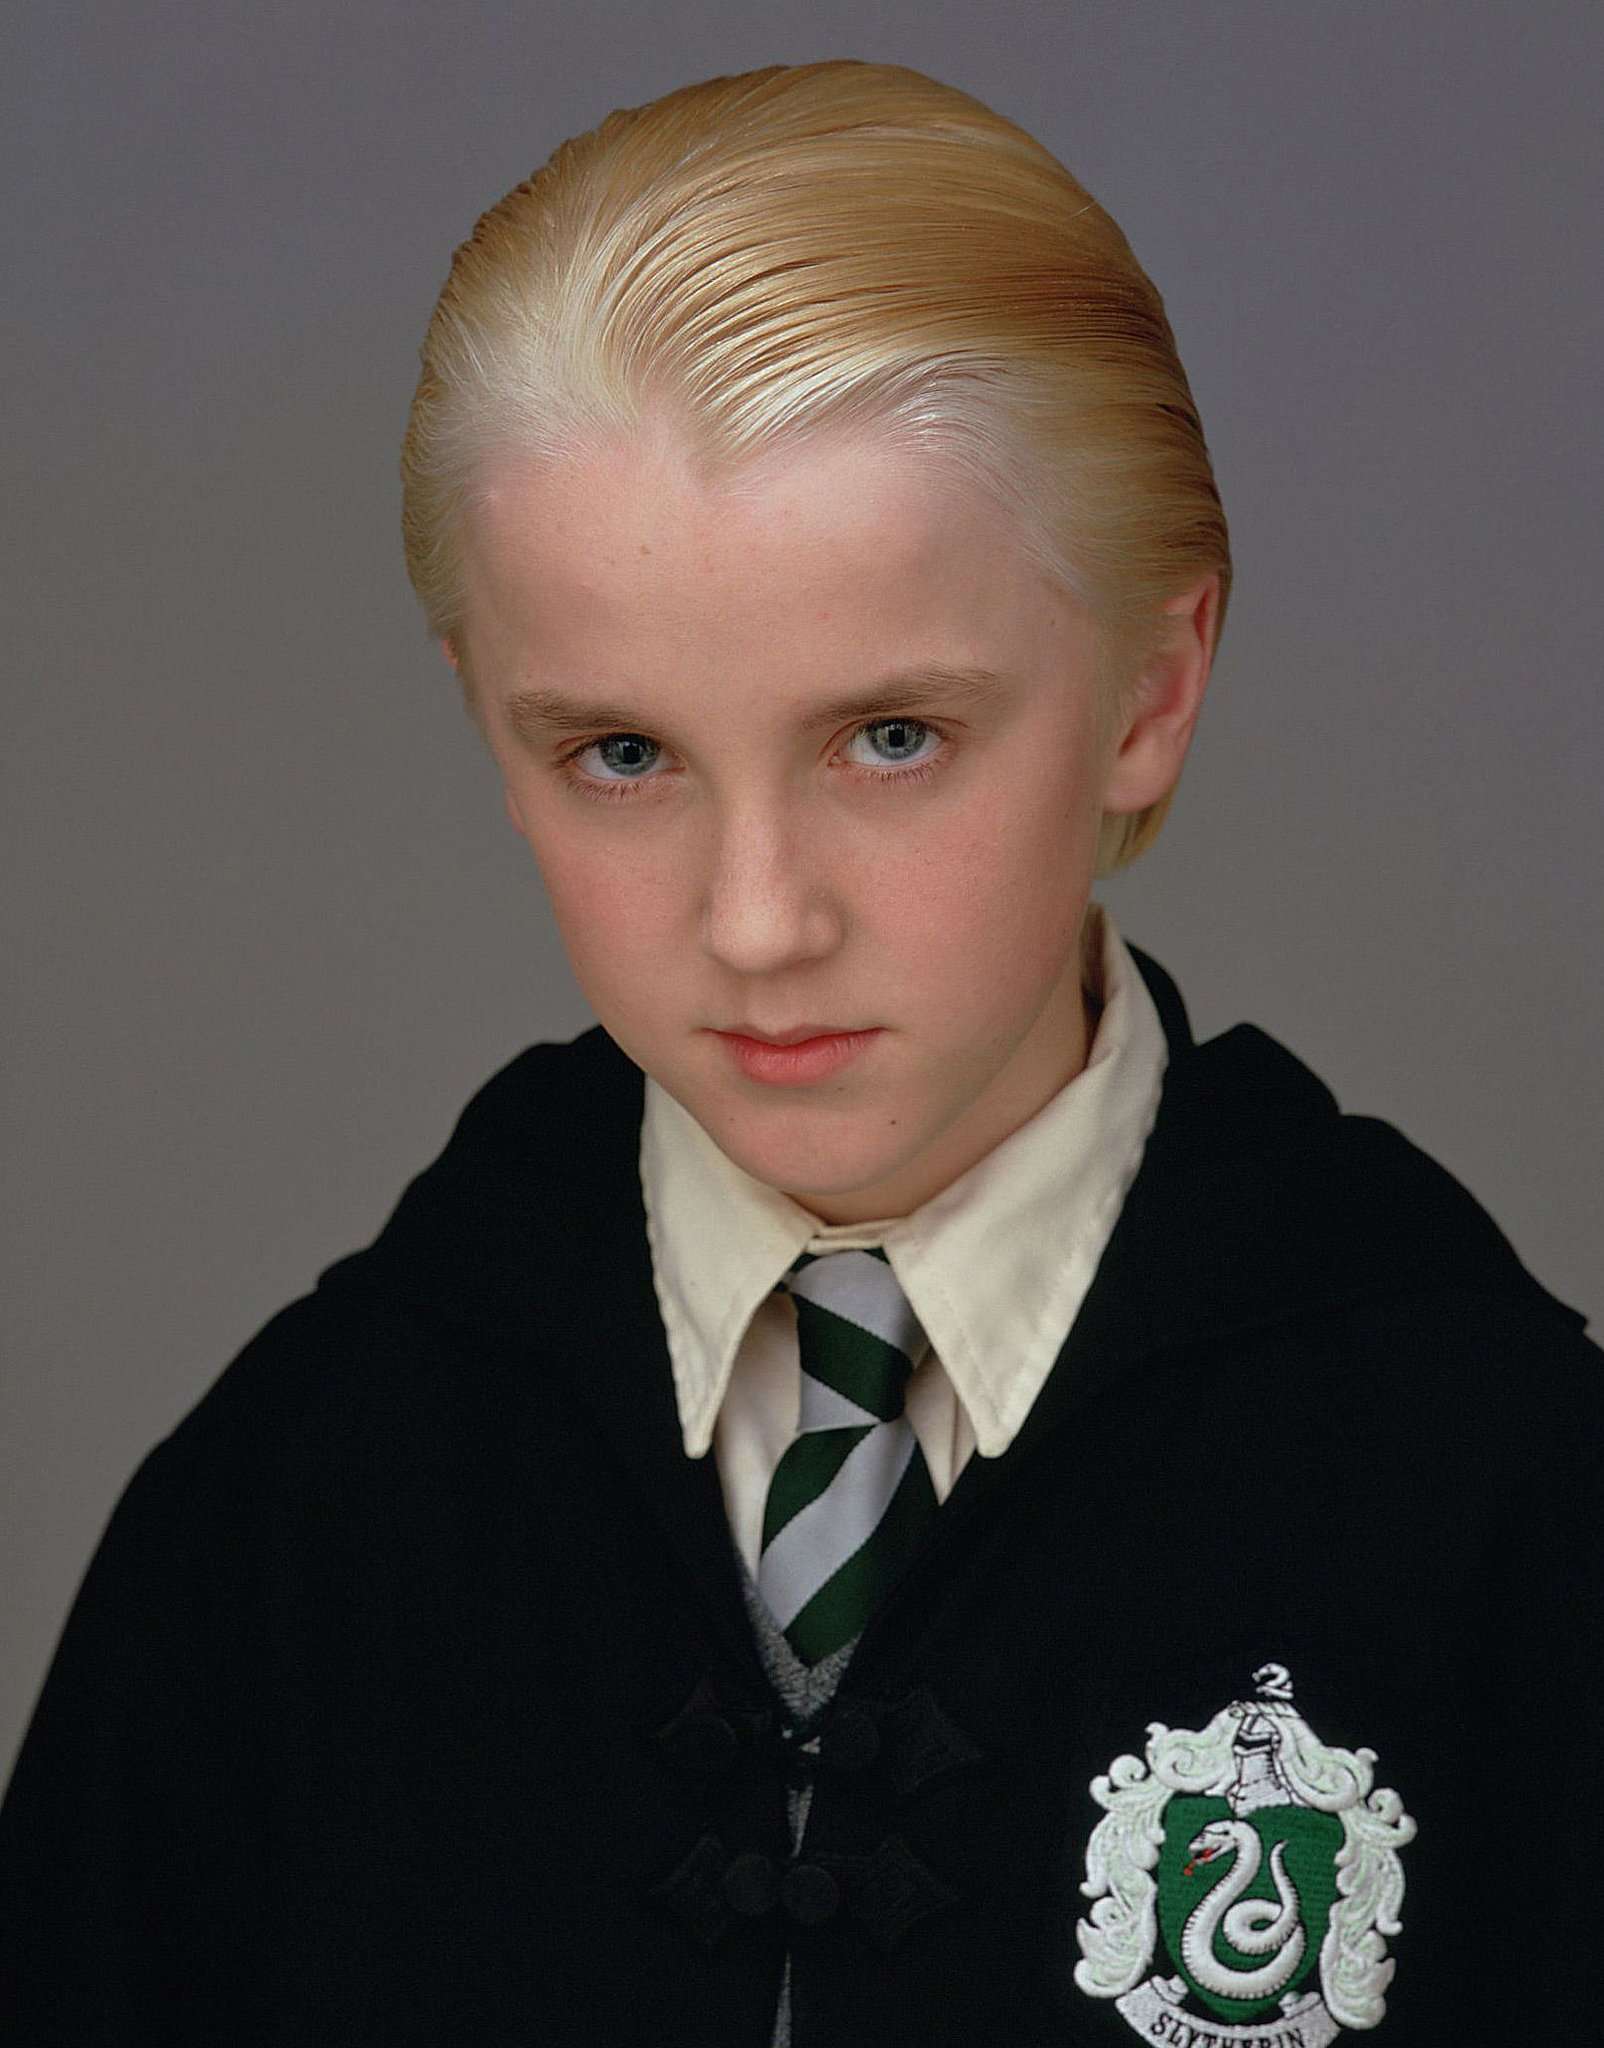 Draco Malfoy, played by Tom Felton